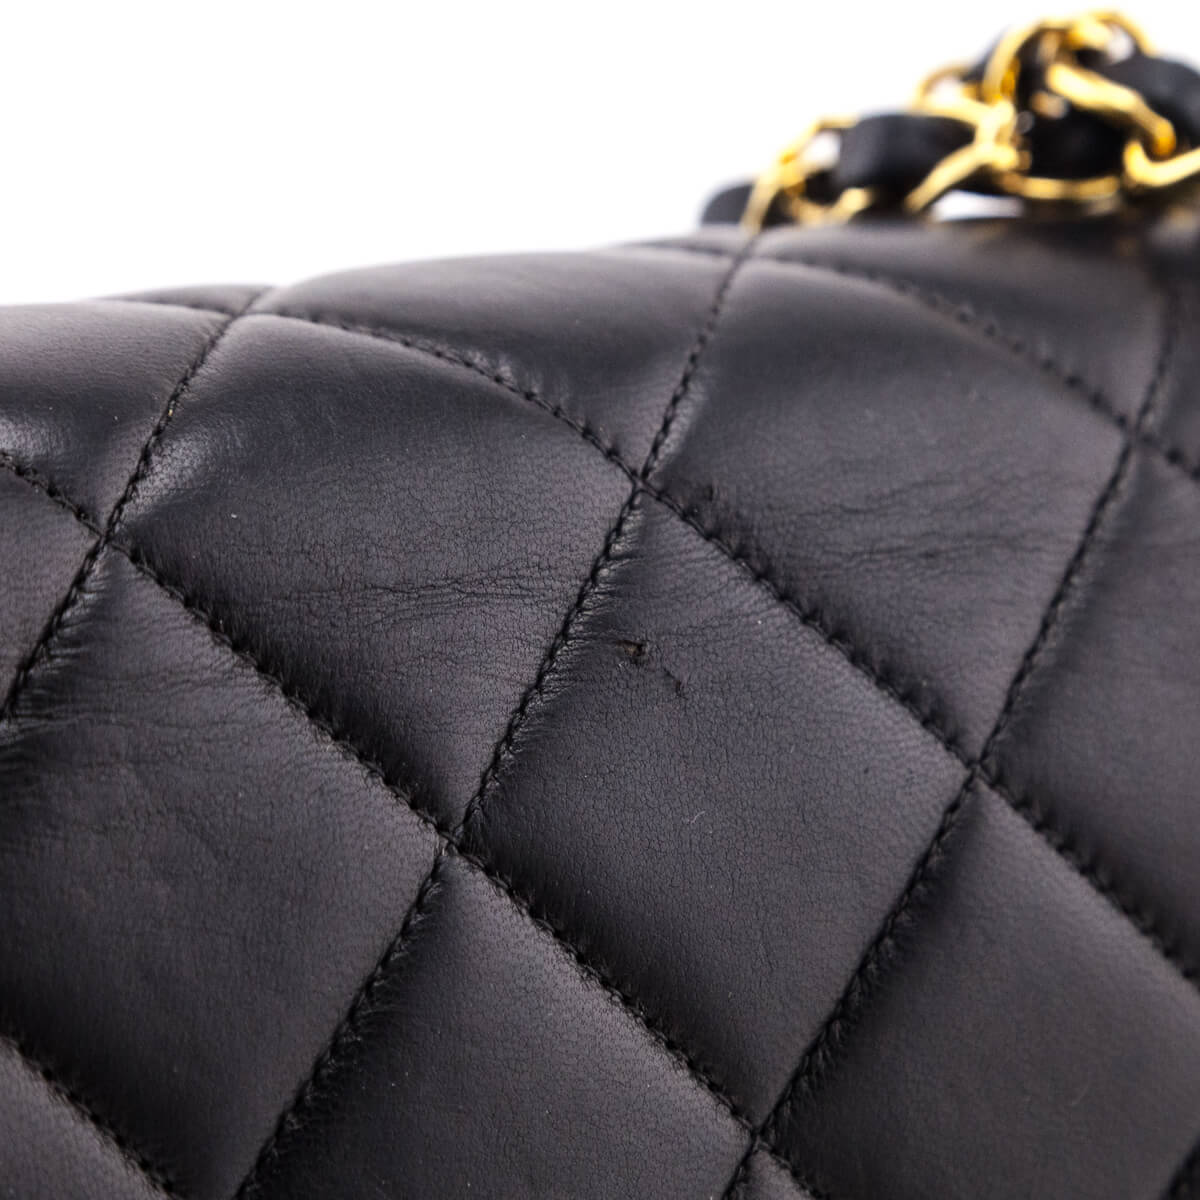 Chanel Double Sided Classic Flap Bag - Medium